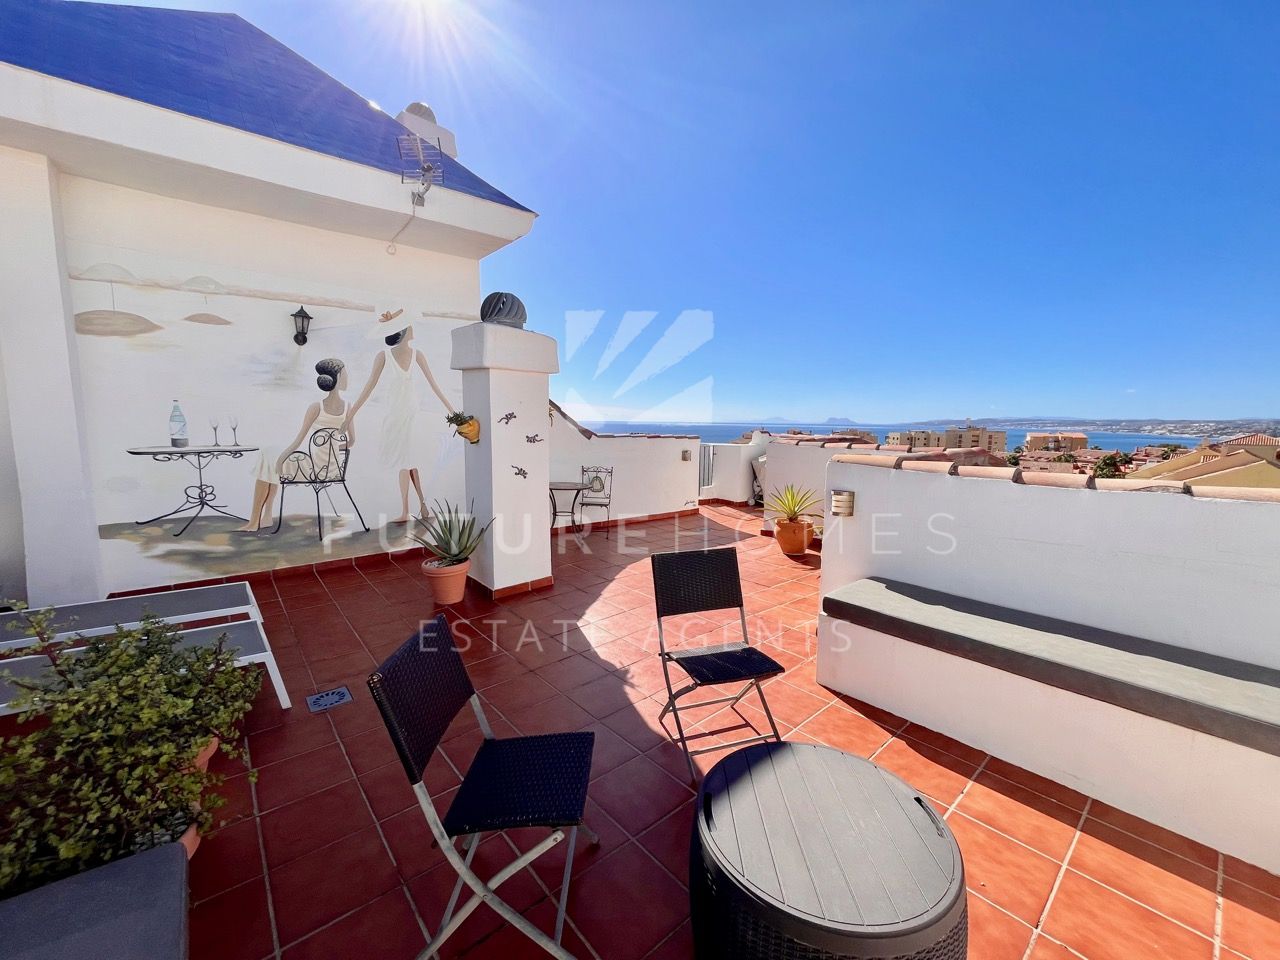 Fantastic penthouse with solarium and sea views for sale in Estepona marina